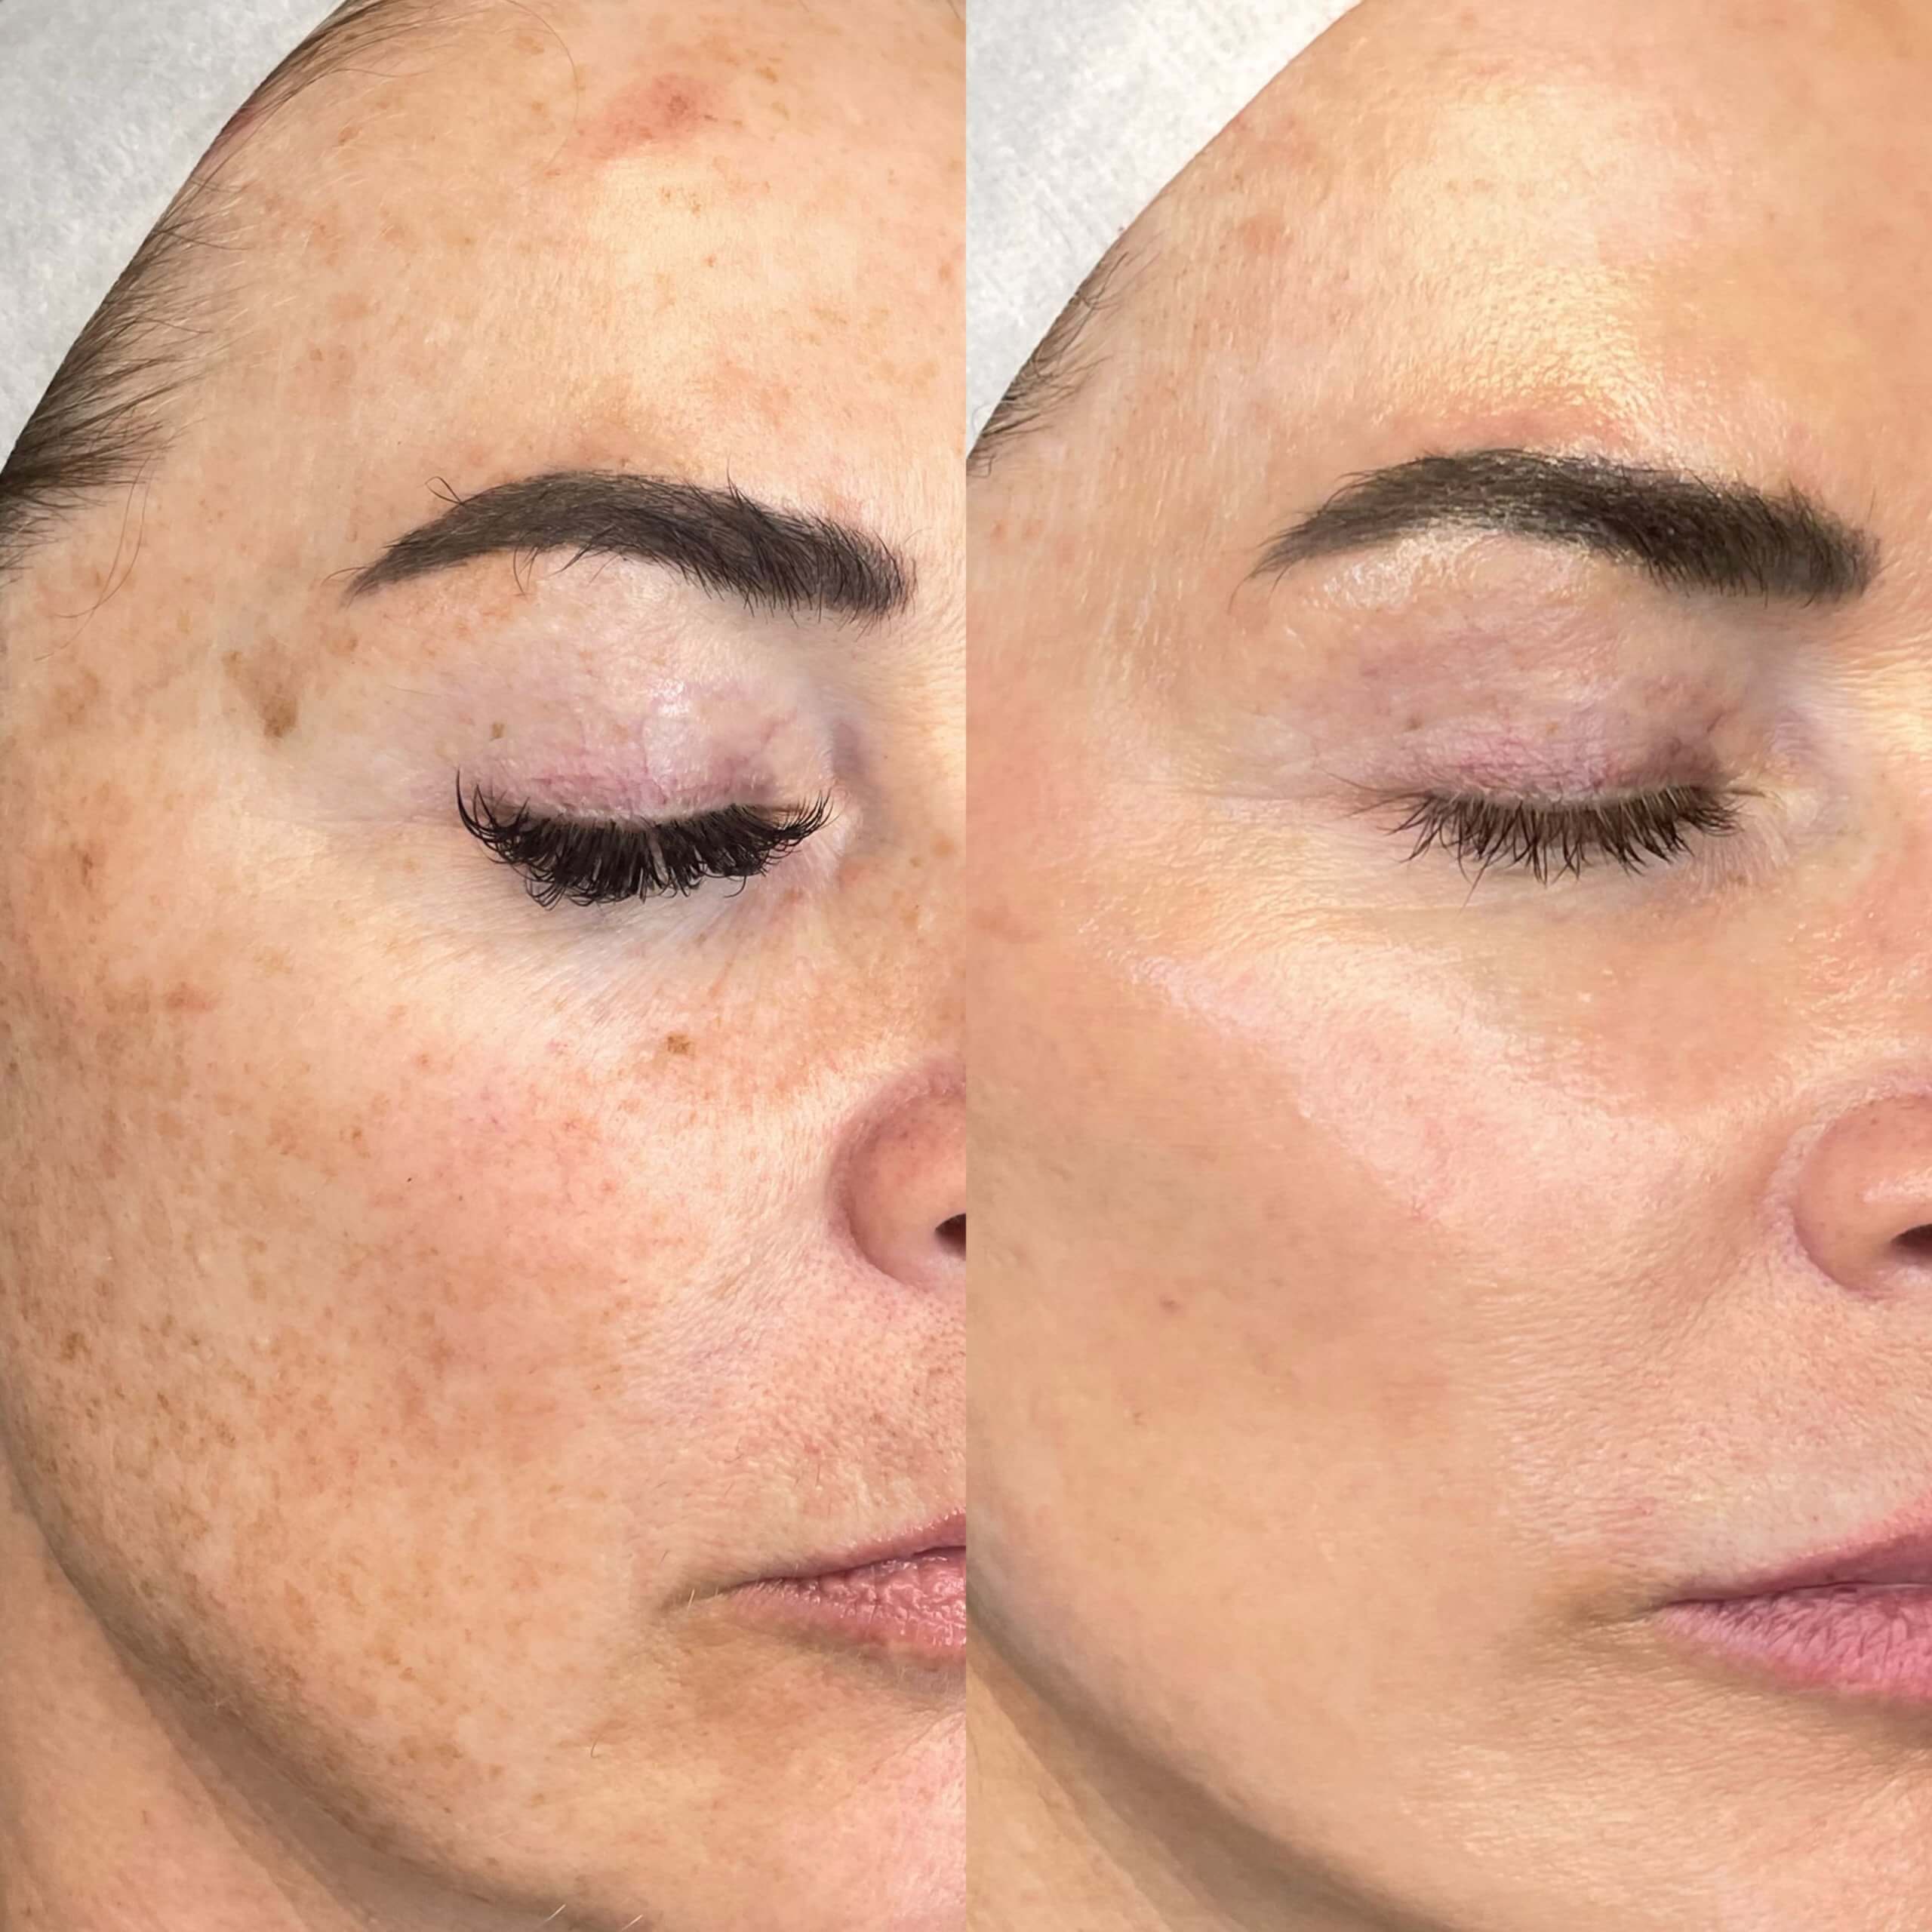 Laser Skin Treatments | BBL Photofacial and Moxi - Results Before Treatment Photos | Gig Harbor Aesthetics in Gig Harbor, WA